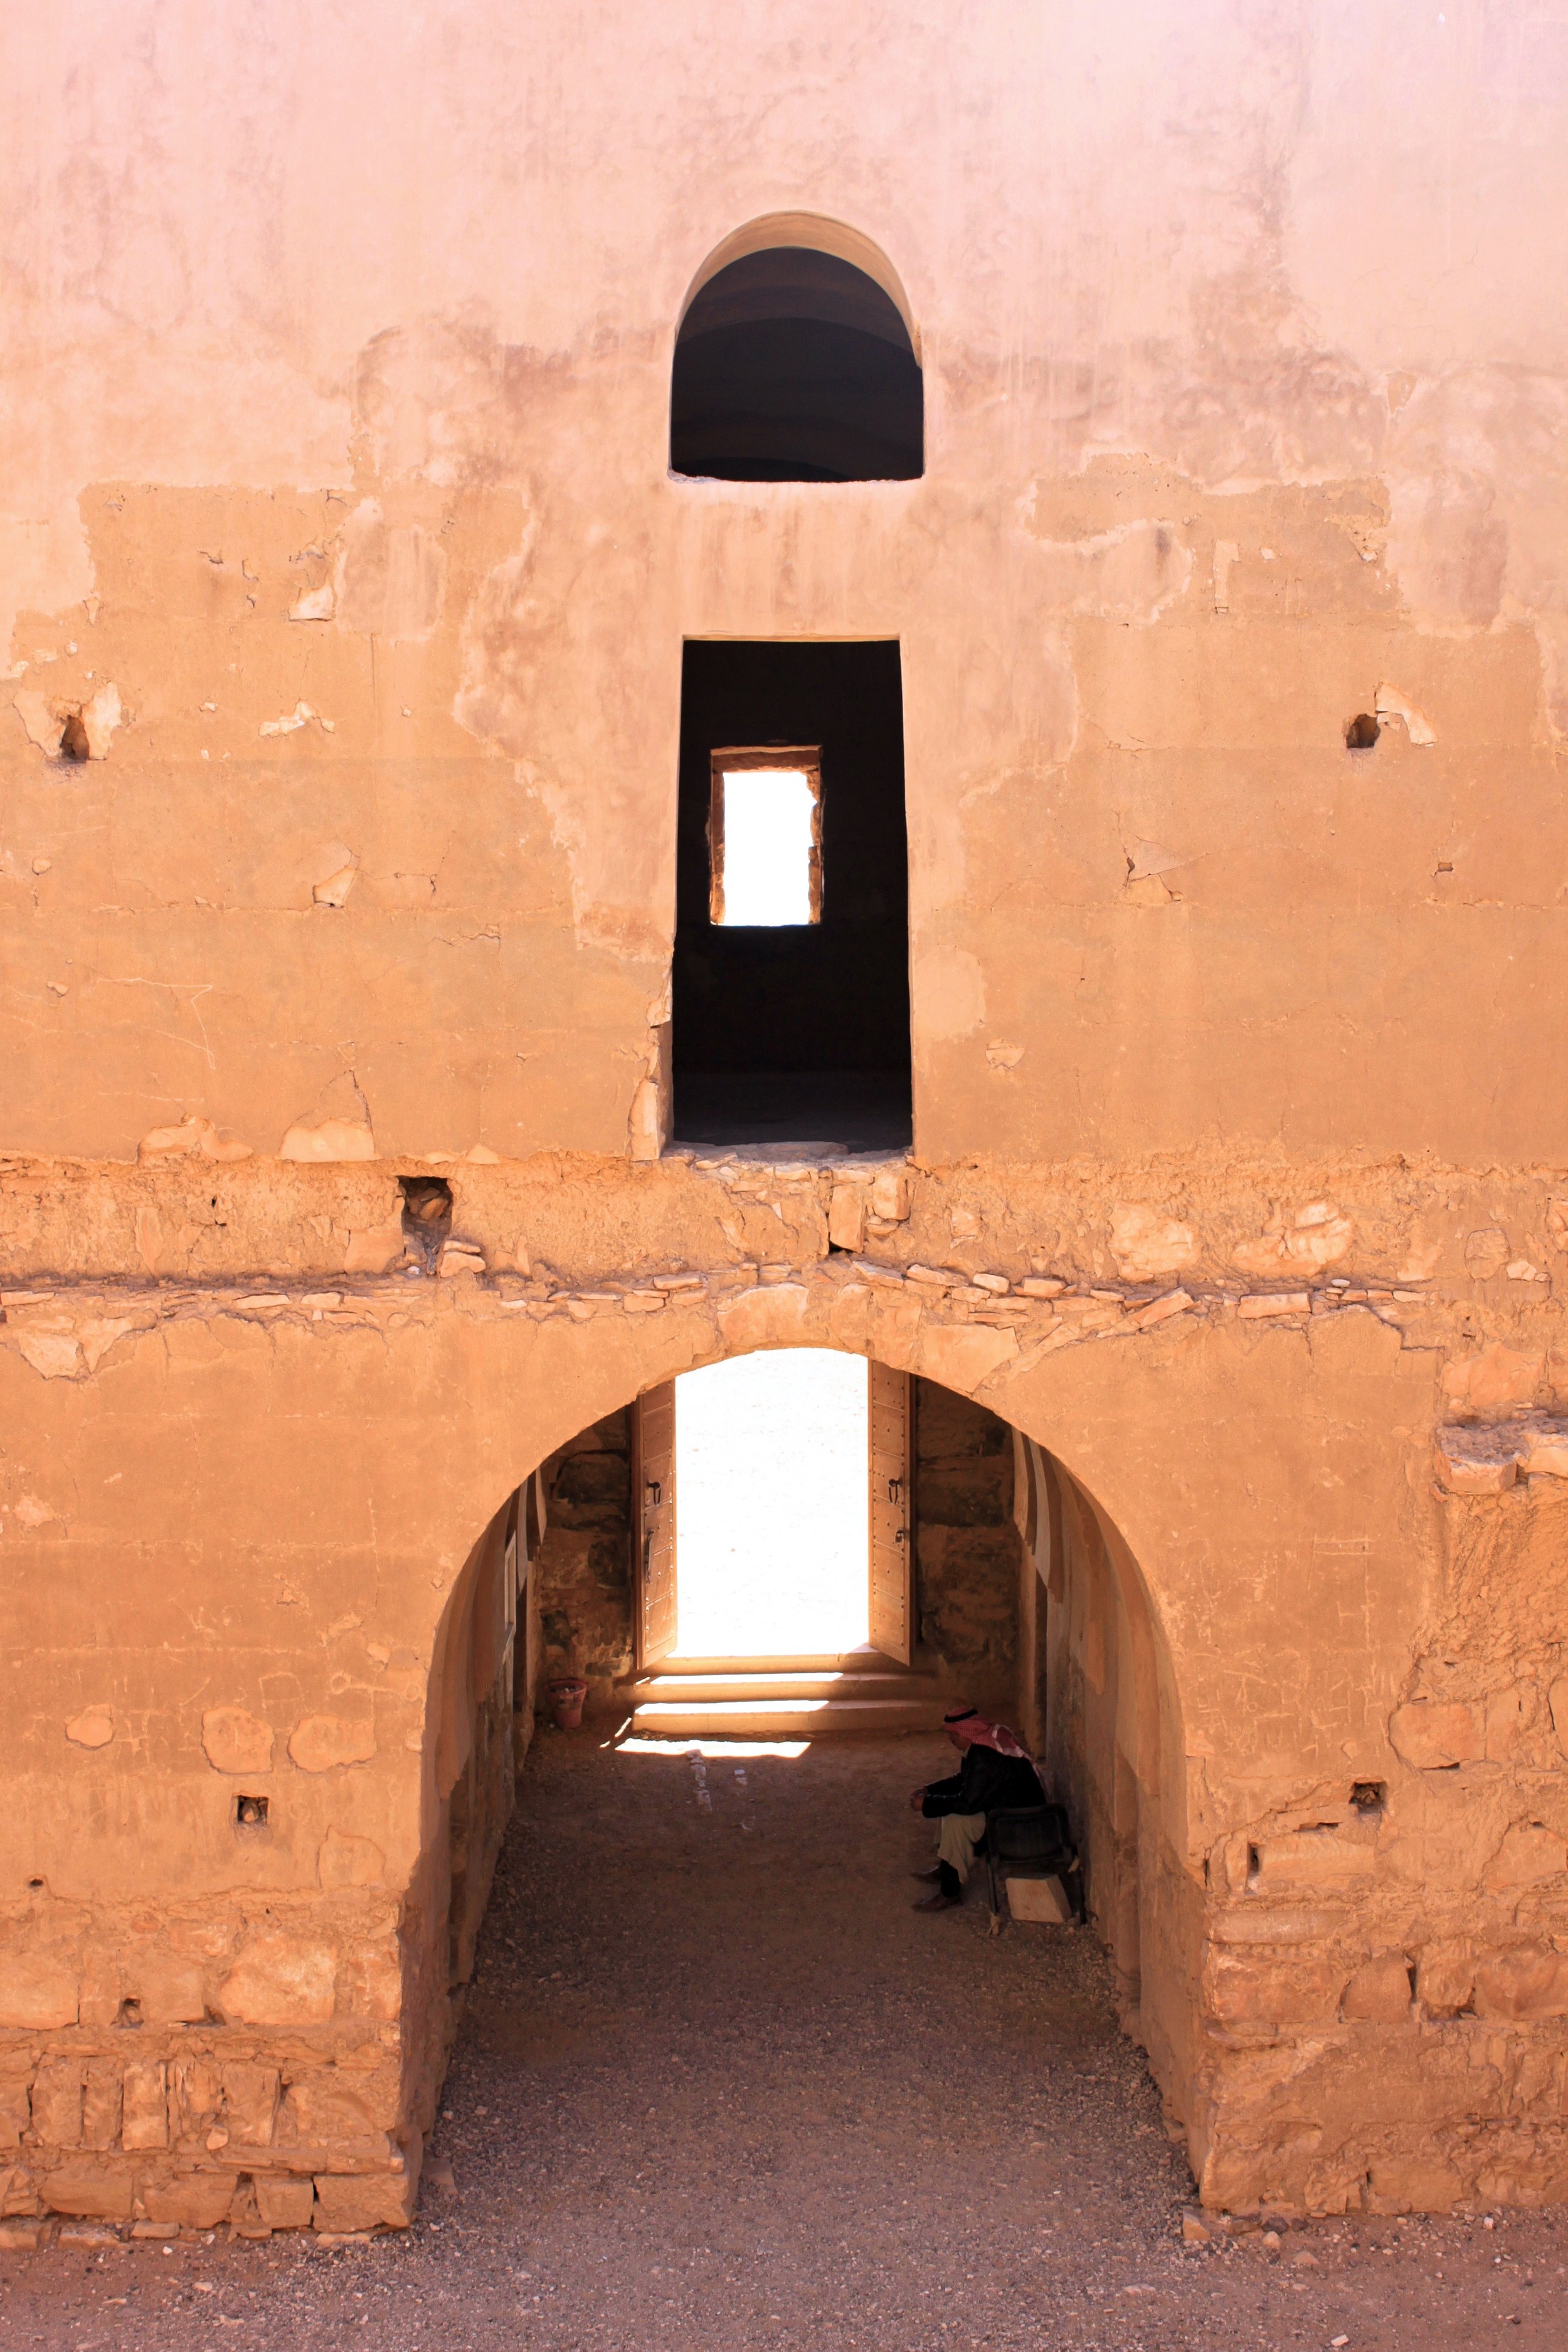 Qasr Al-Harrana or Qasr Kharana, "Desert Castle" in eastern Jordan